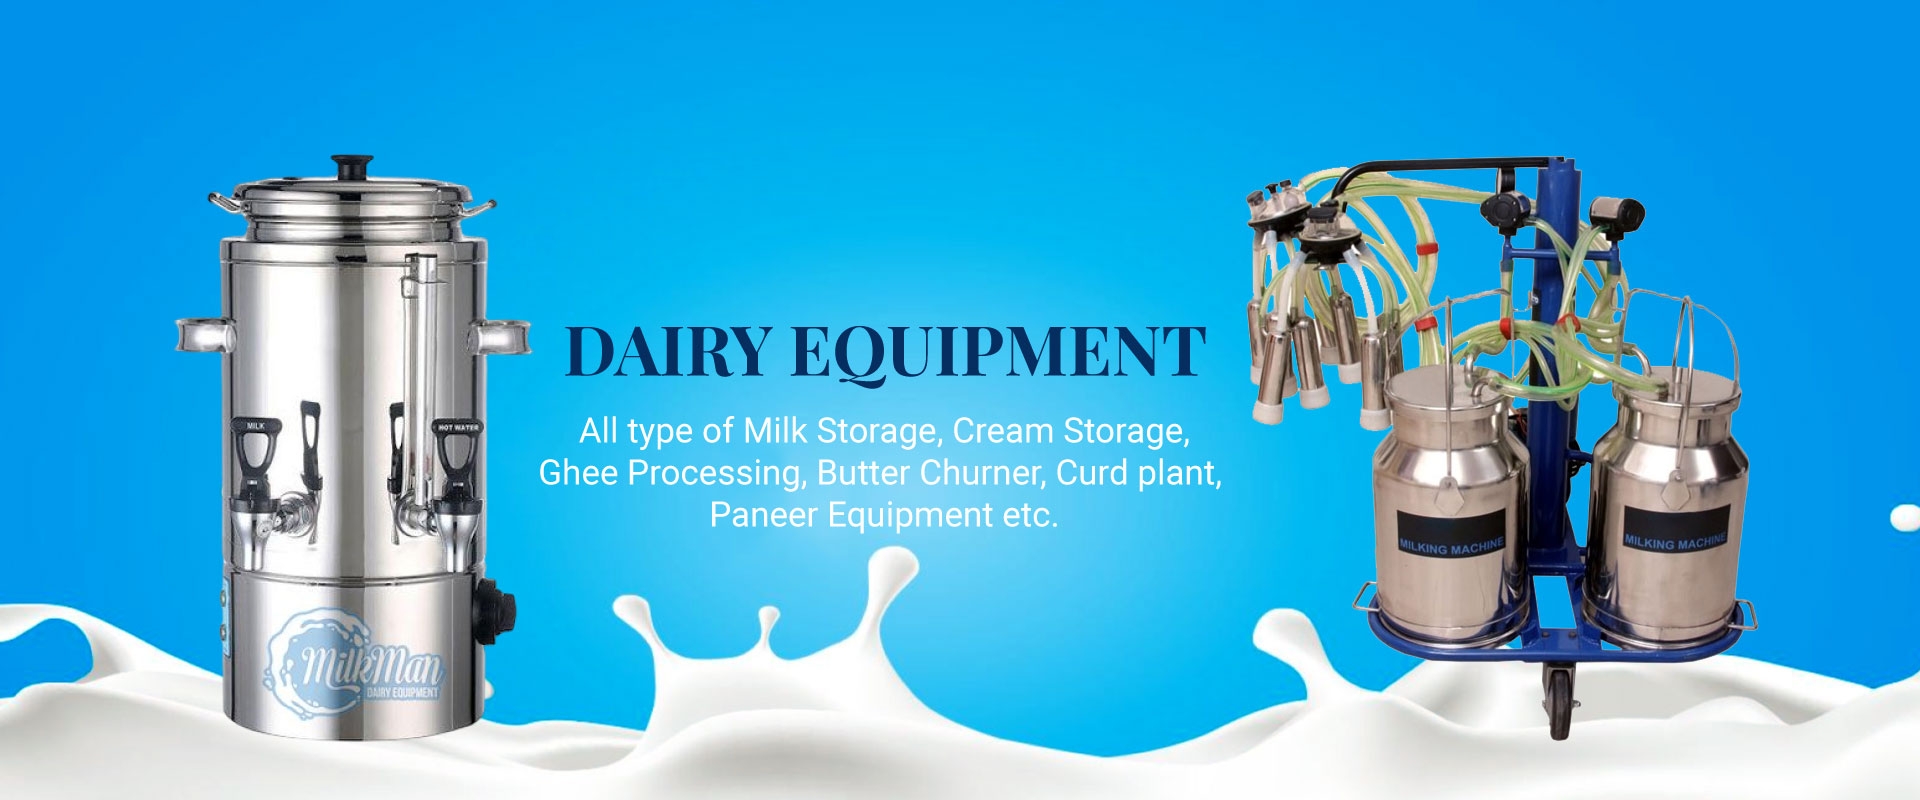 Dairy Equipment in Ghana